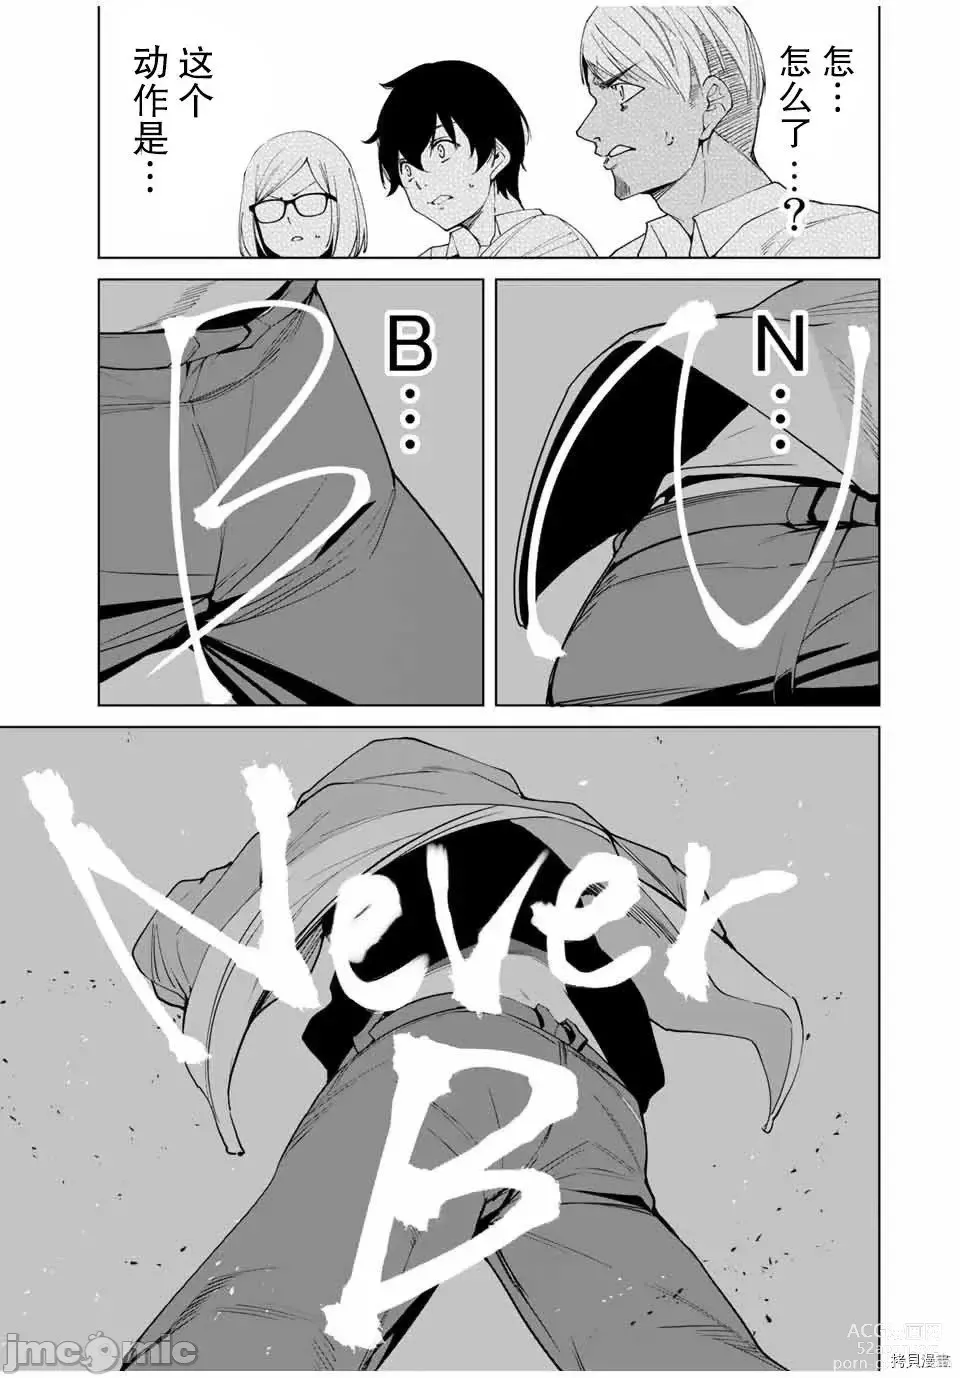 Page 182 of manga 命運戀人 Destiny Lovers 【汉化版】1